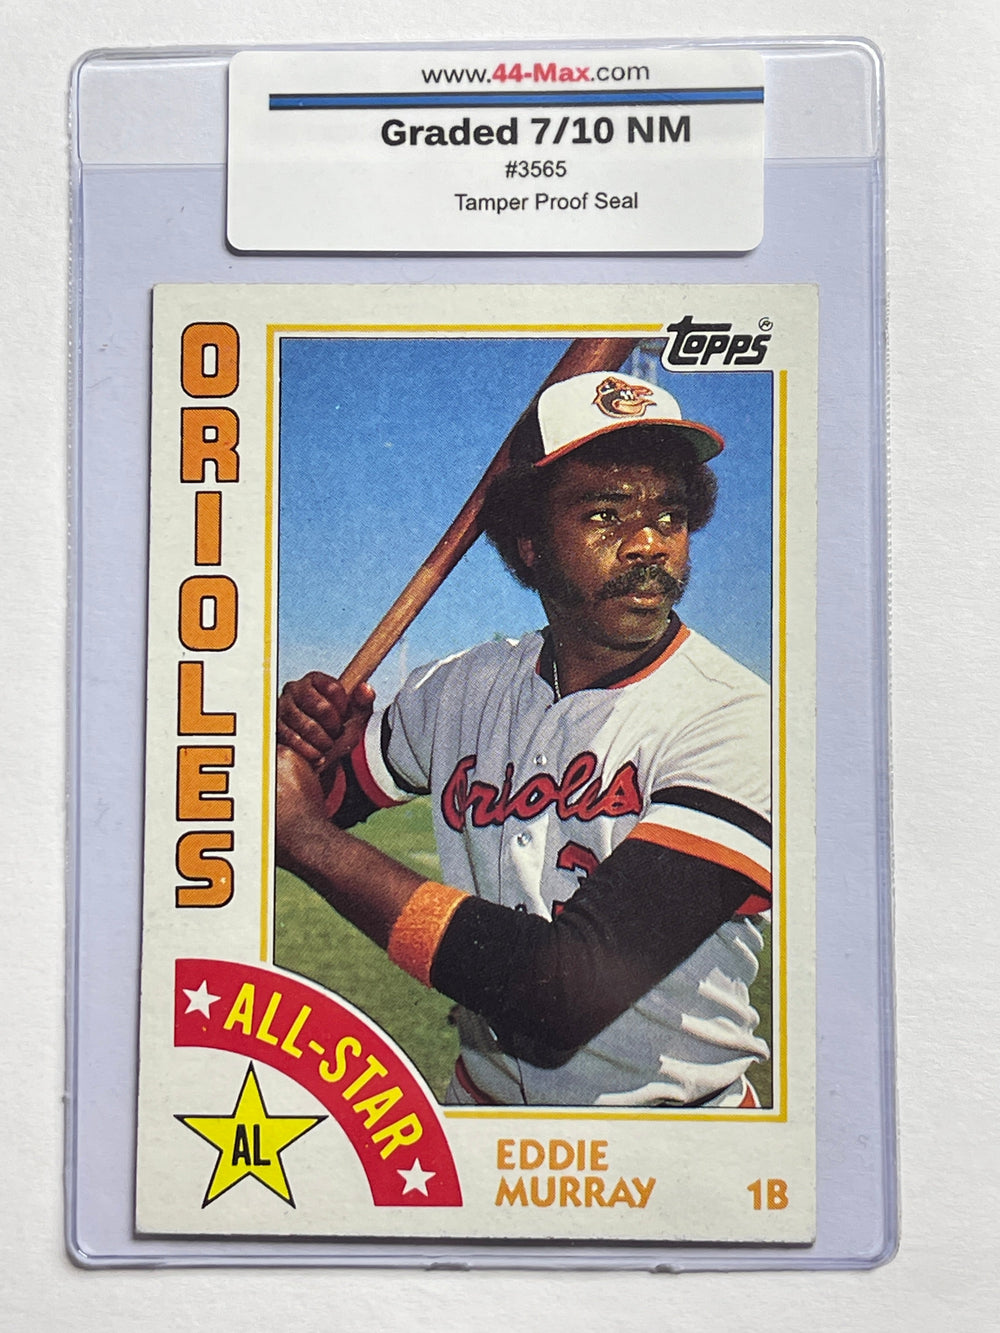 Eddie Murray AS 1984 Topps Baseball Card. 44-Max 7/10 NM #3565